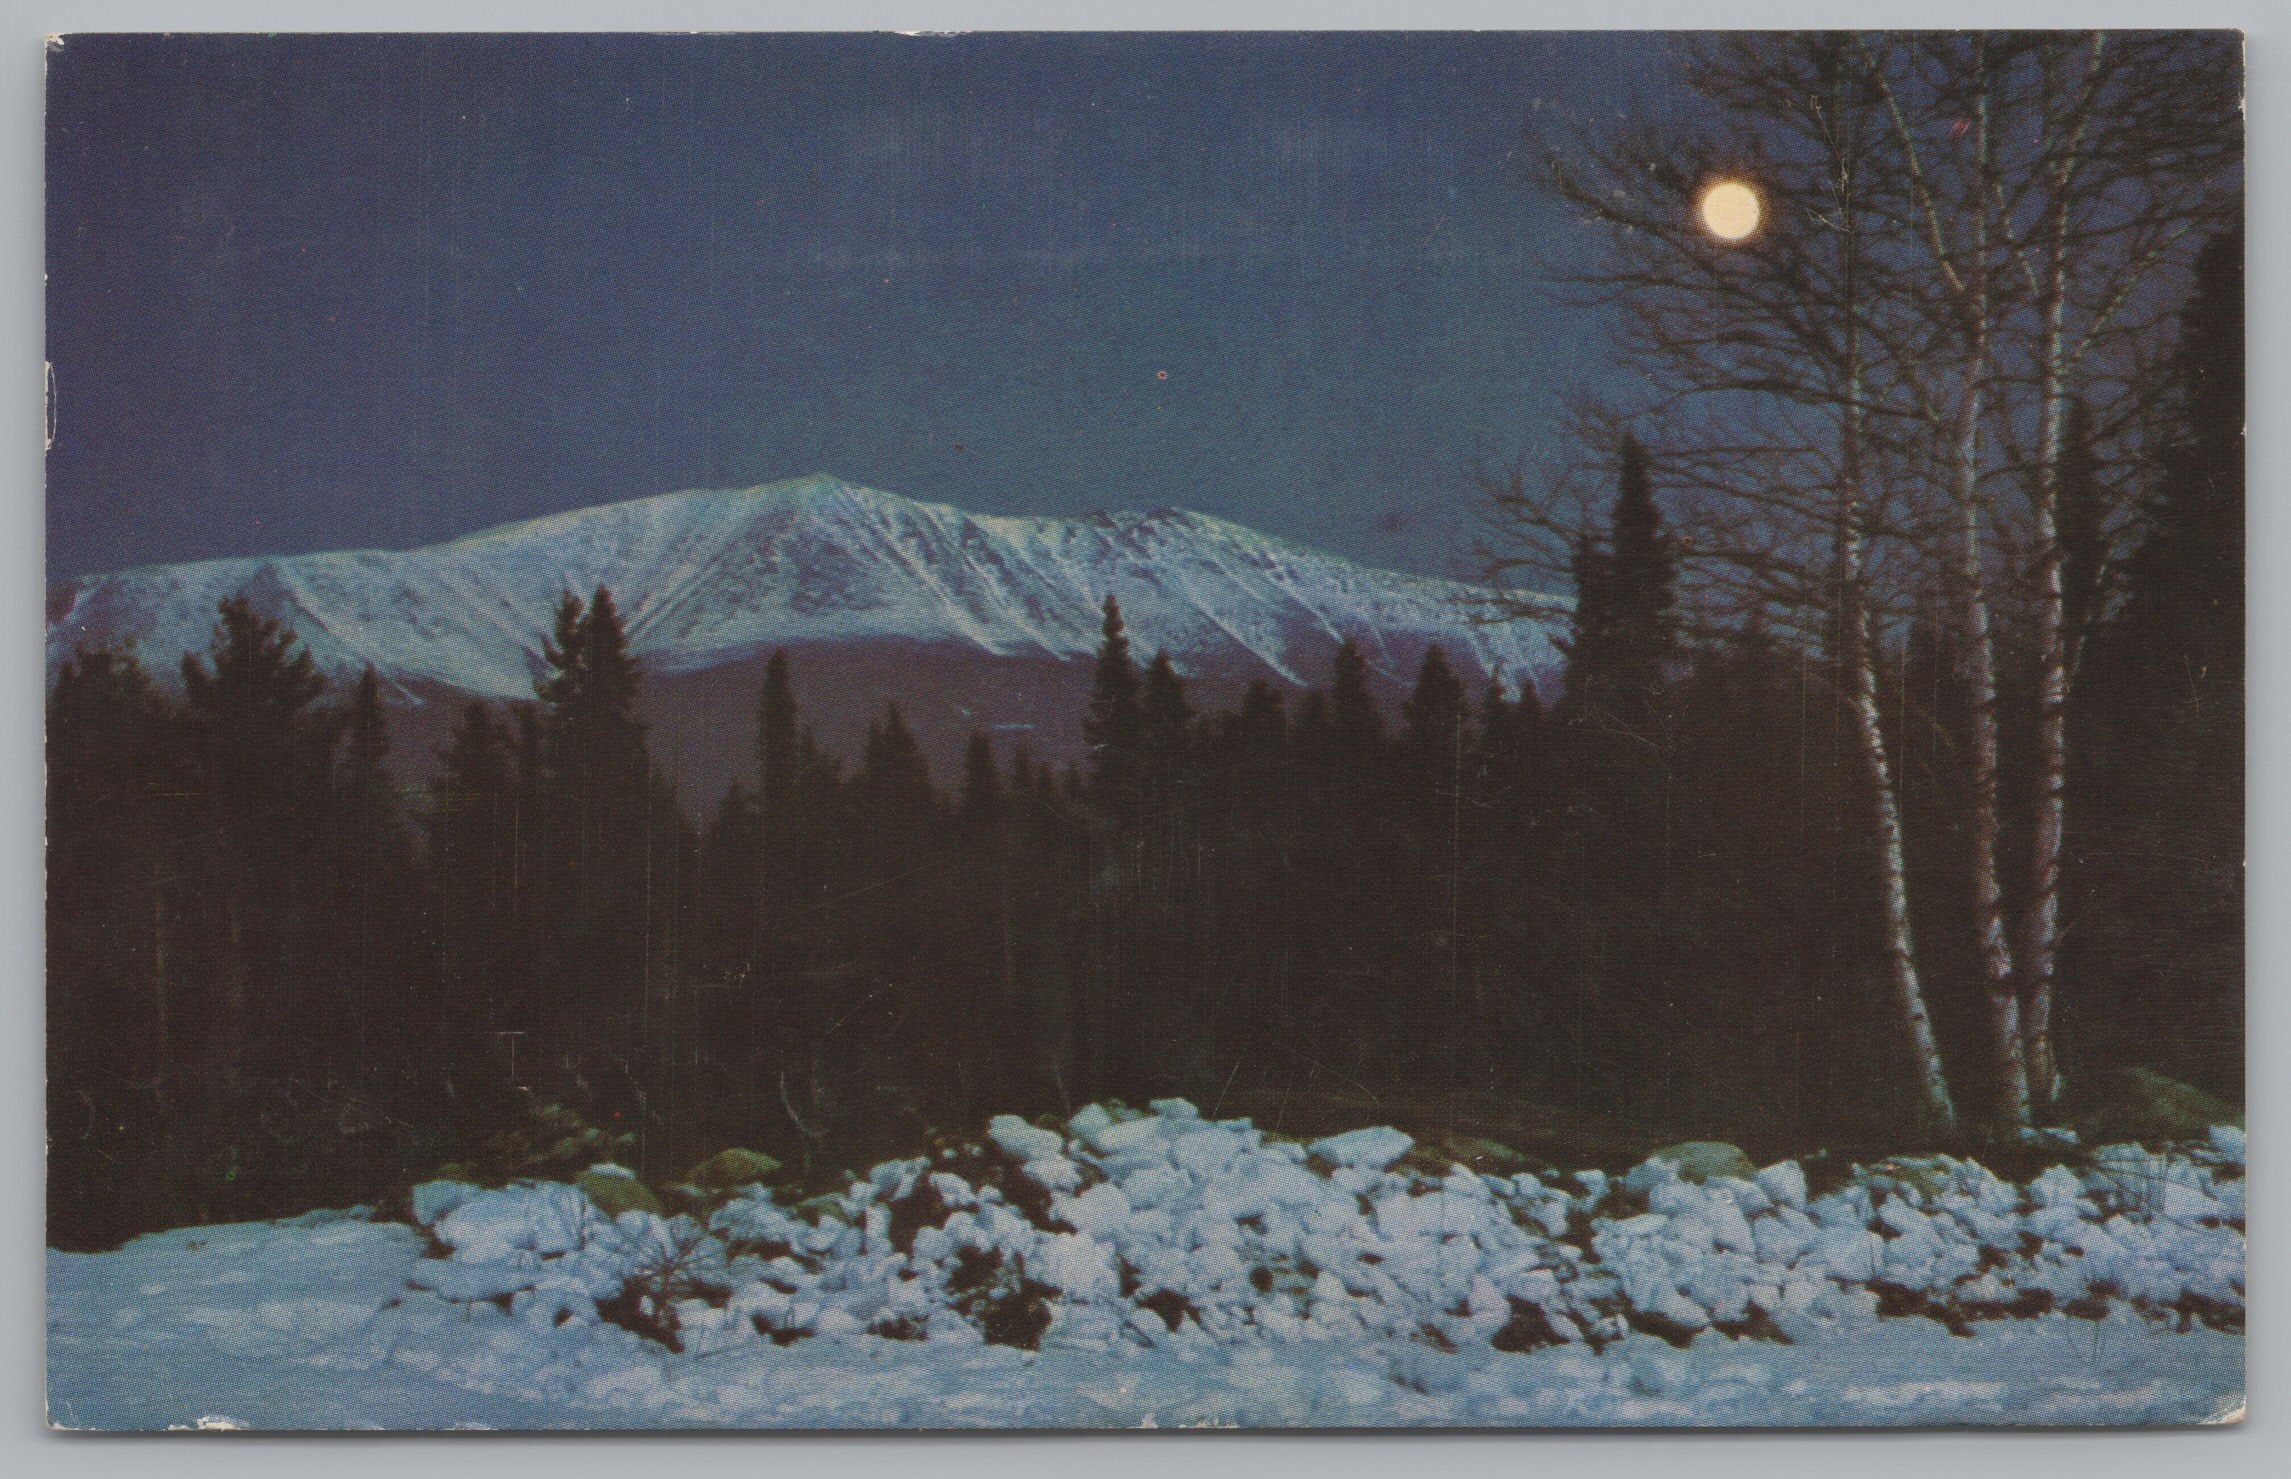 Mount Katahdin By Moonlight, Winter Scenery, Vintage Post Card.